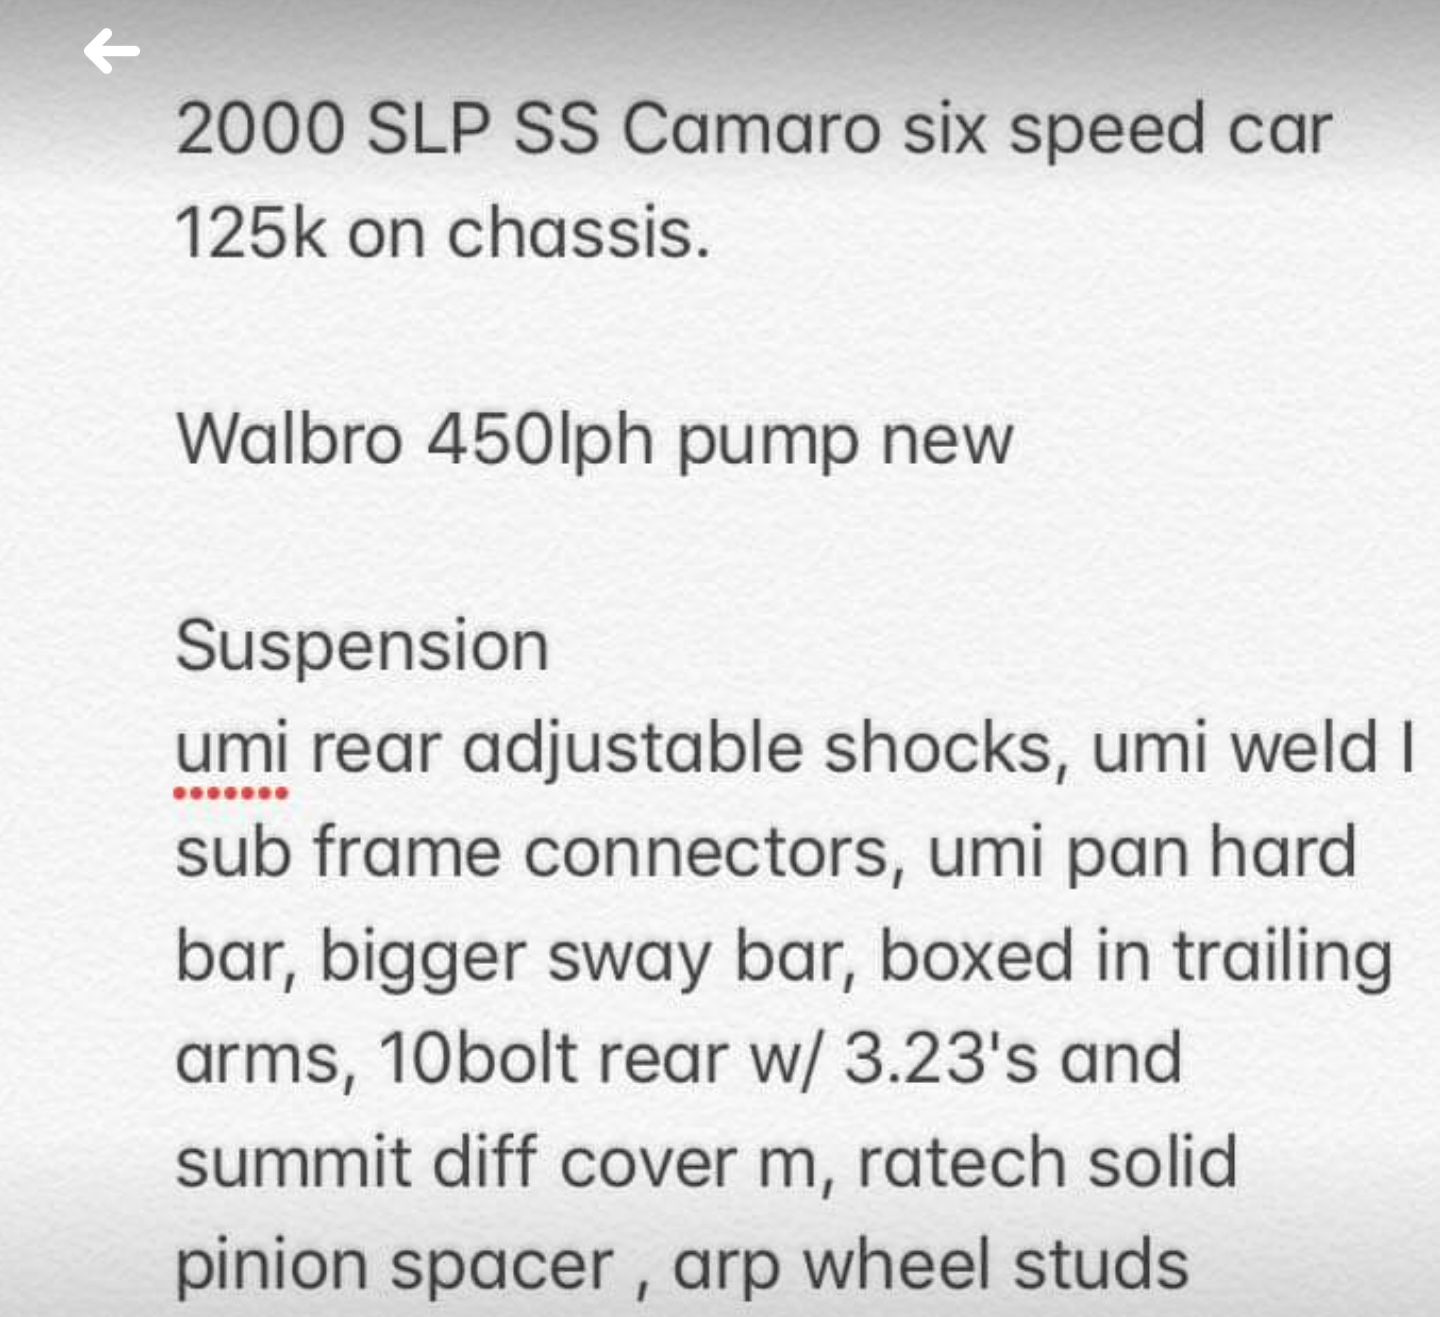 2000 Chevrolet Camaro - 2000 Camaro SS SLP 6spd ROLLER $2500 OBO - Used - VIN Will put in later - 125,000 Miles - Houston, TX 77494, United States